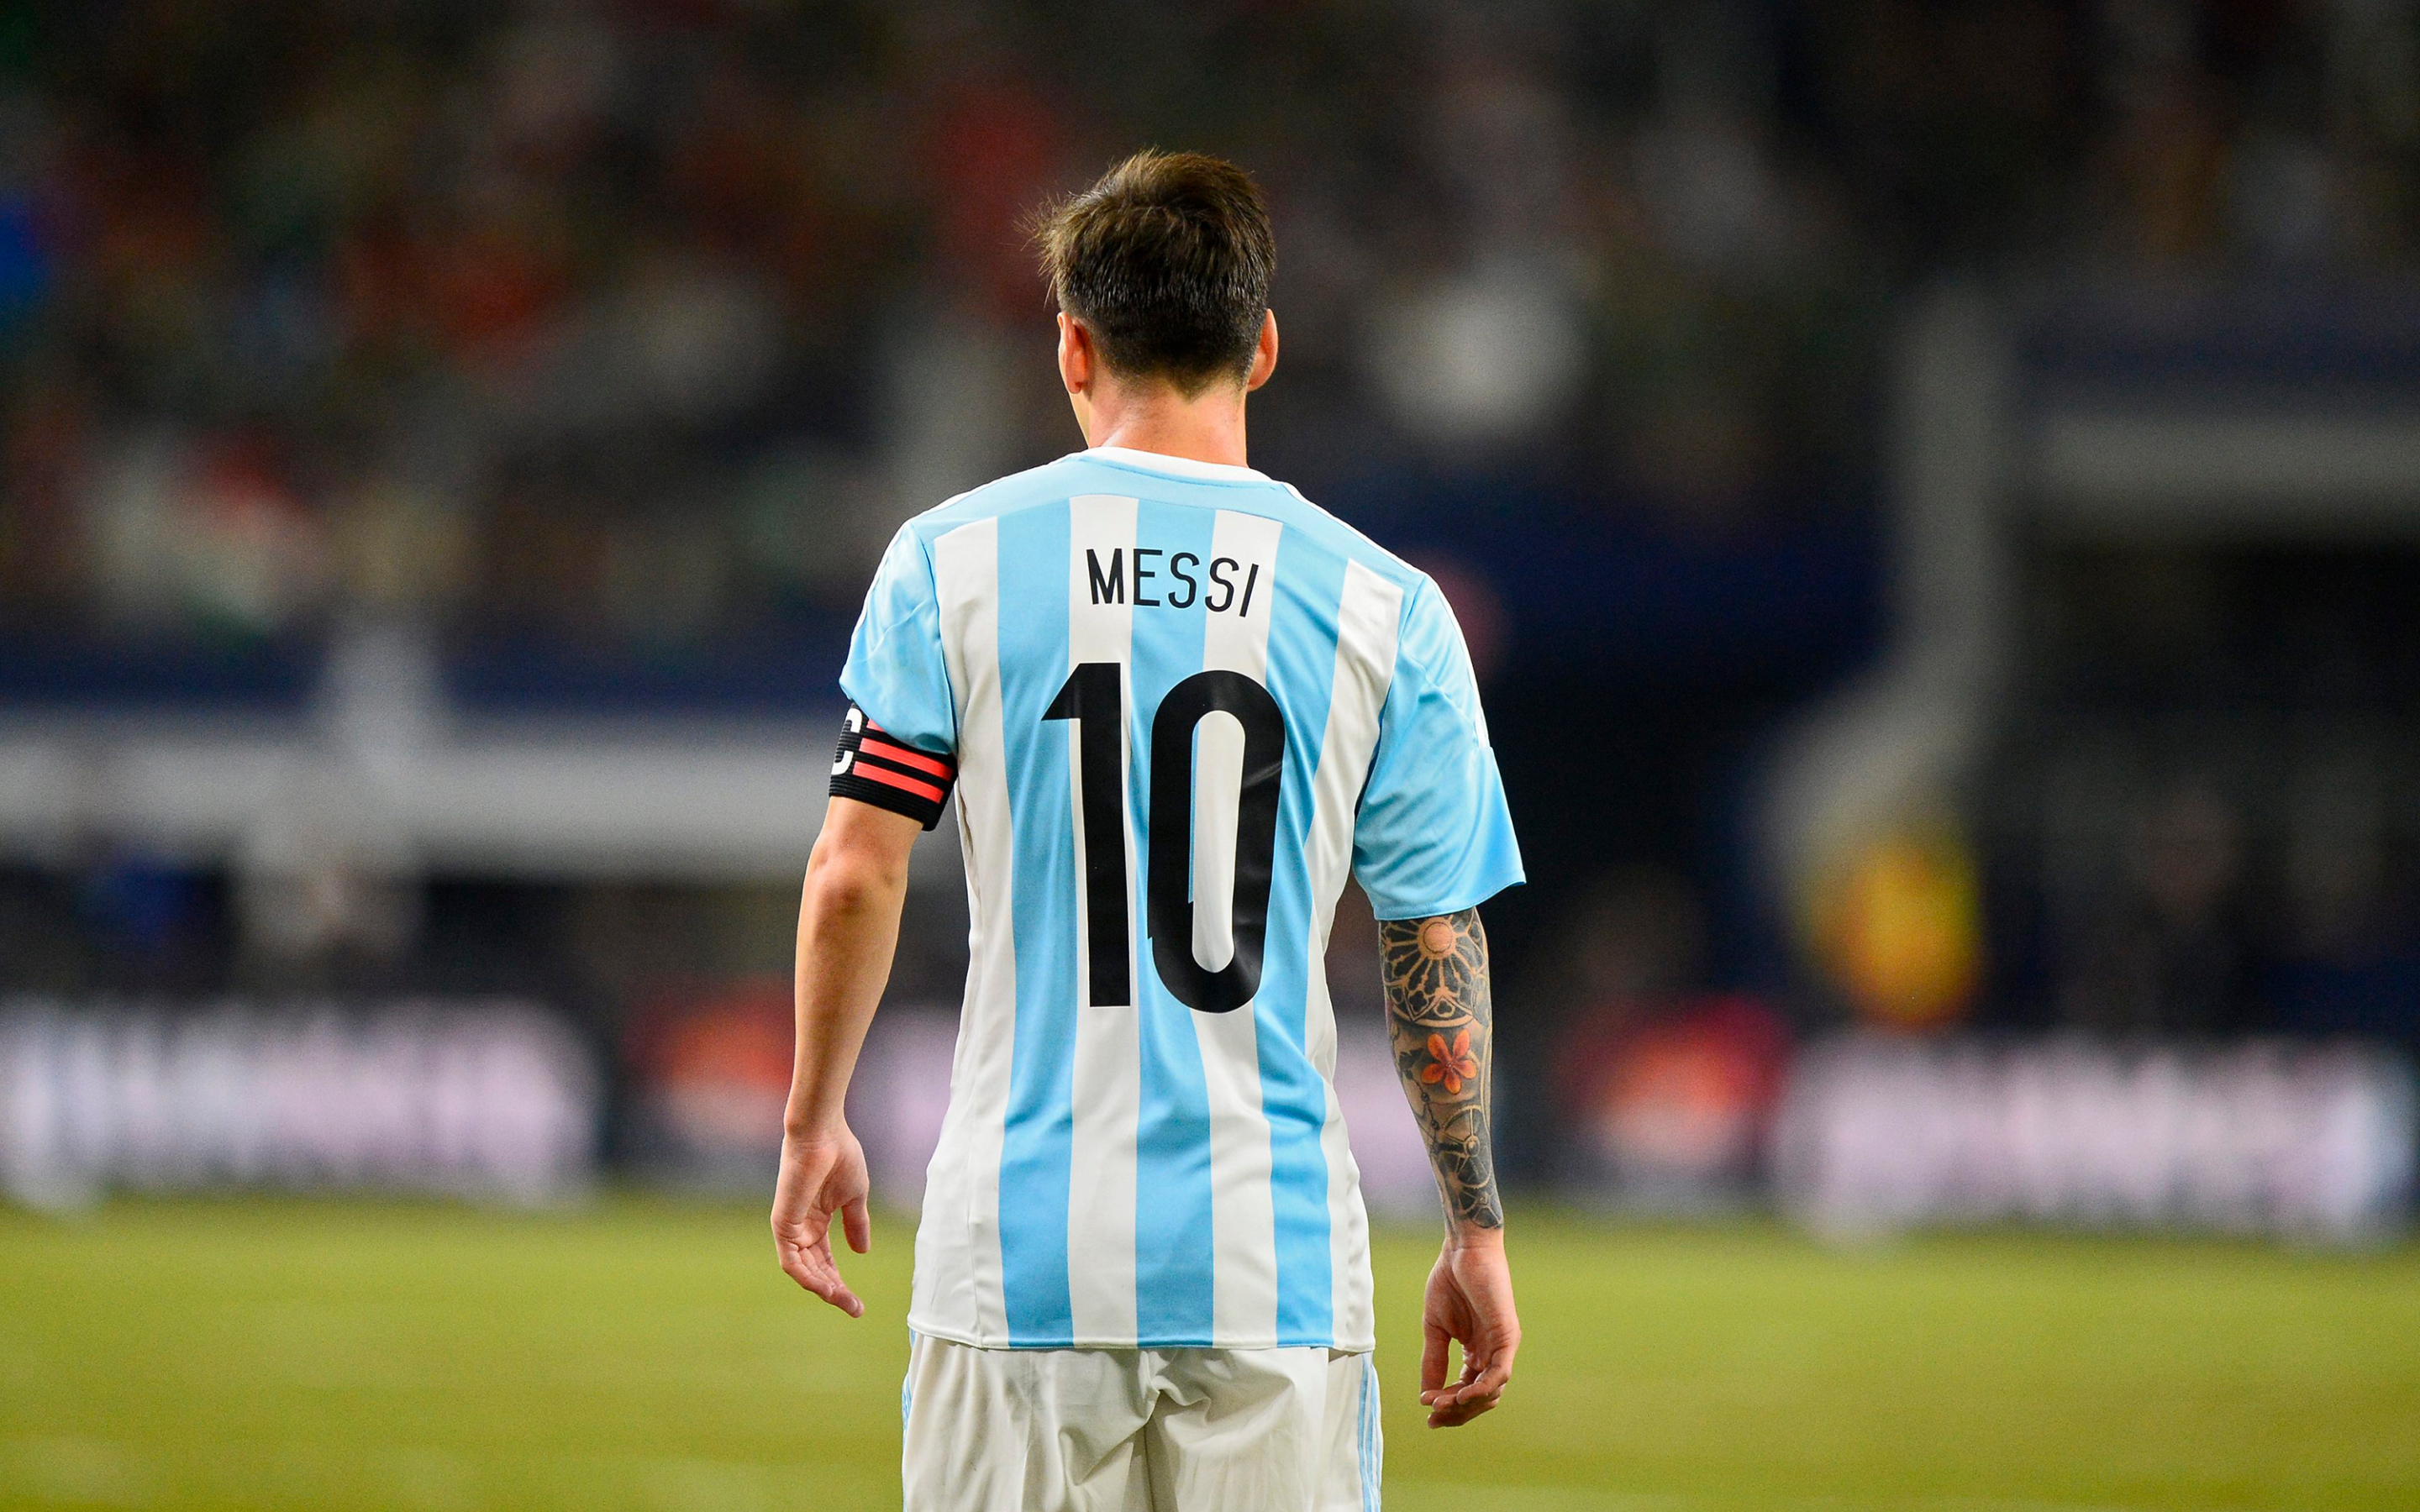 Lionel Messi, 10 number, jersey, 2880x1800 wallpaper